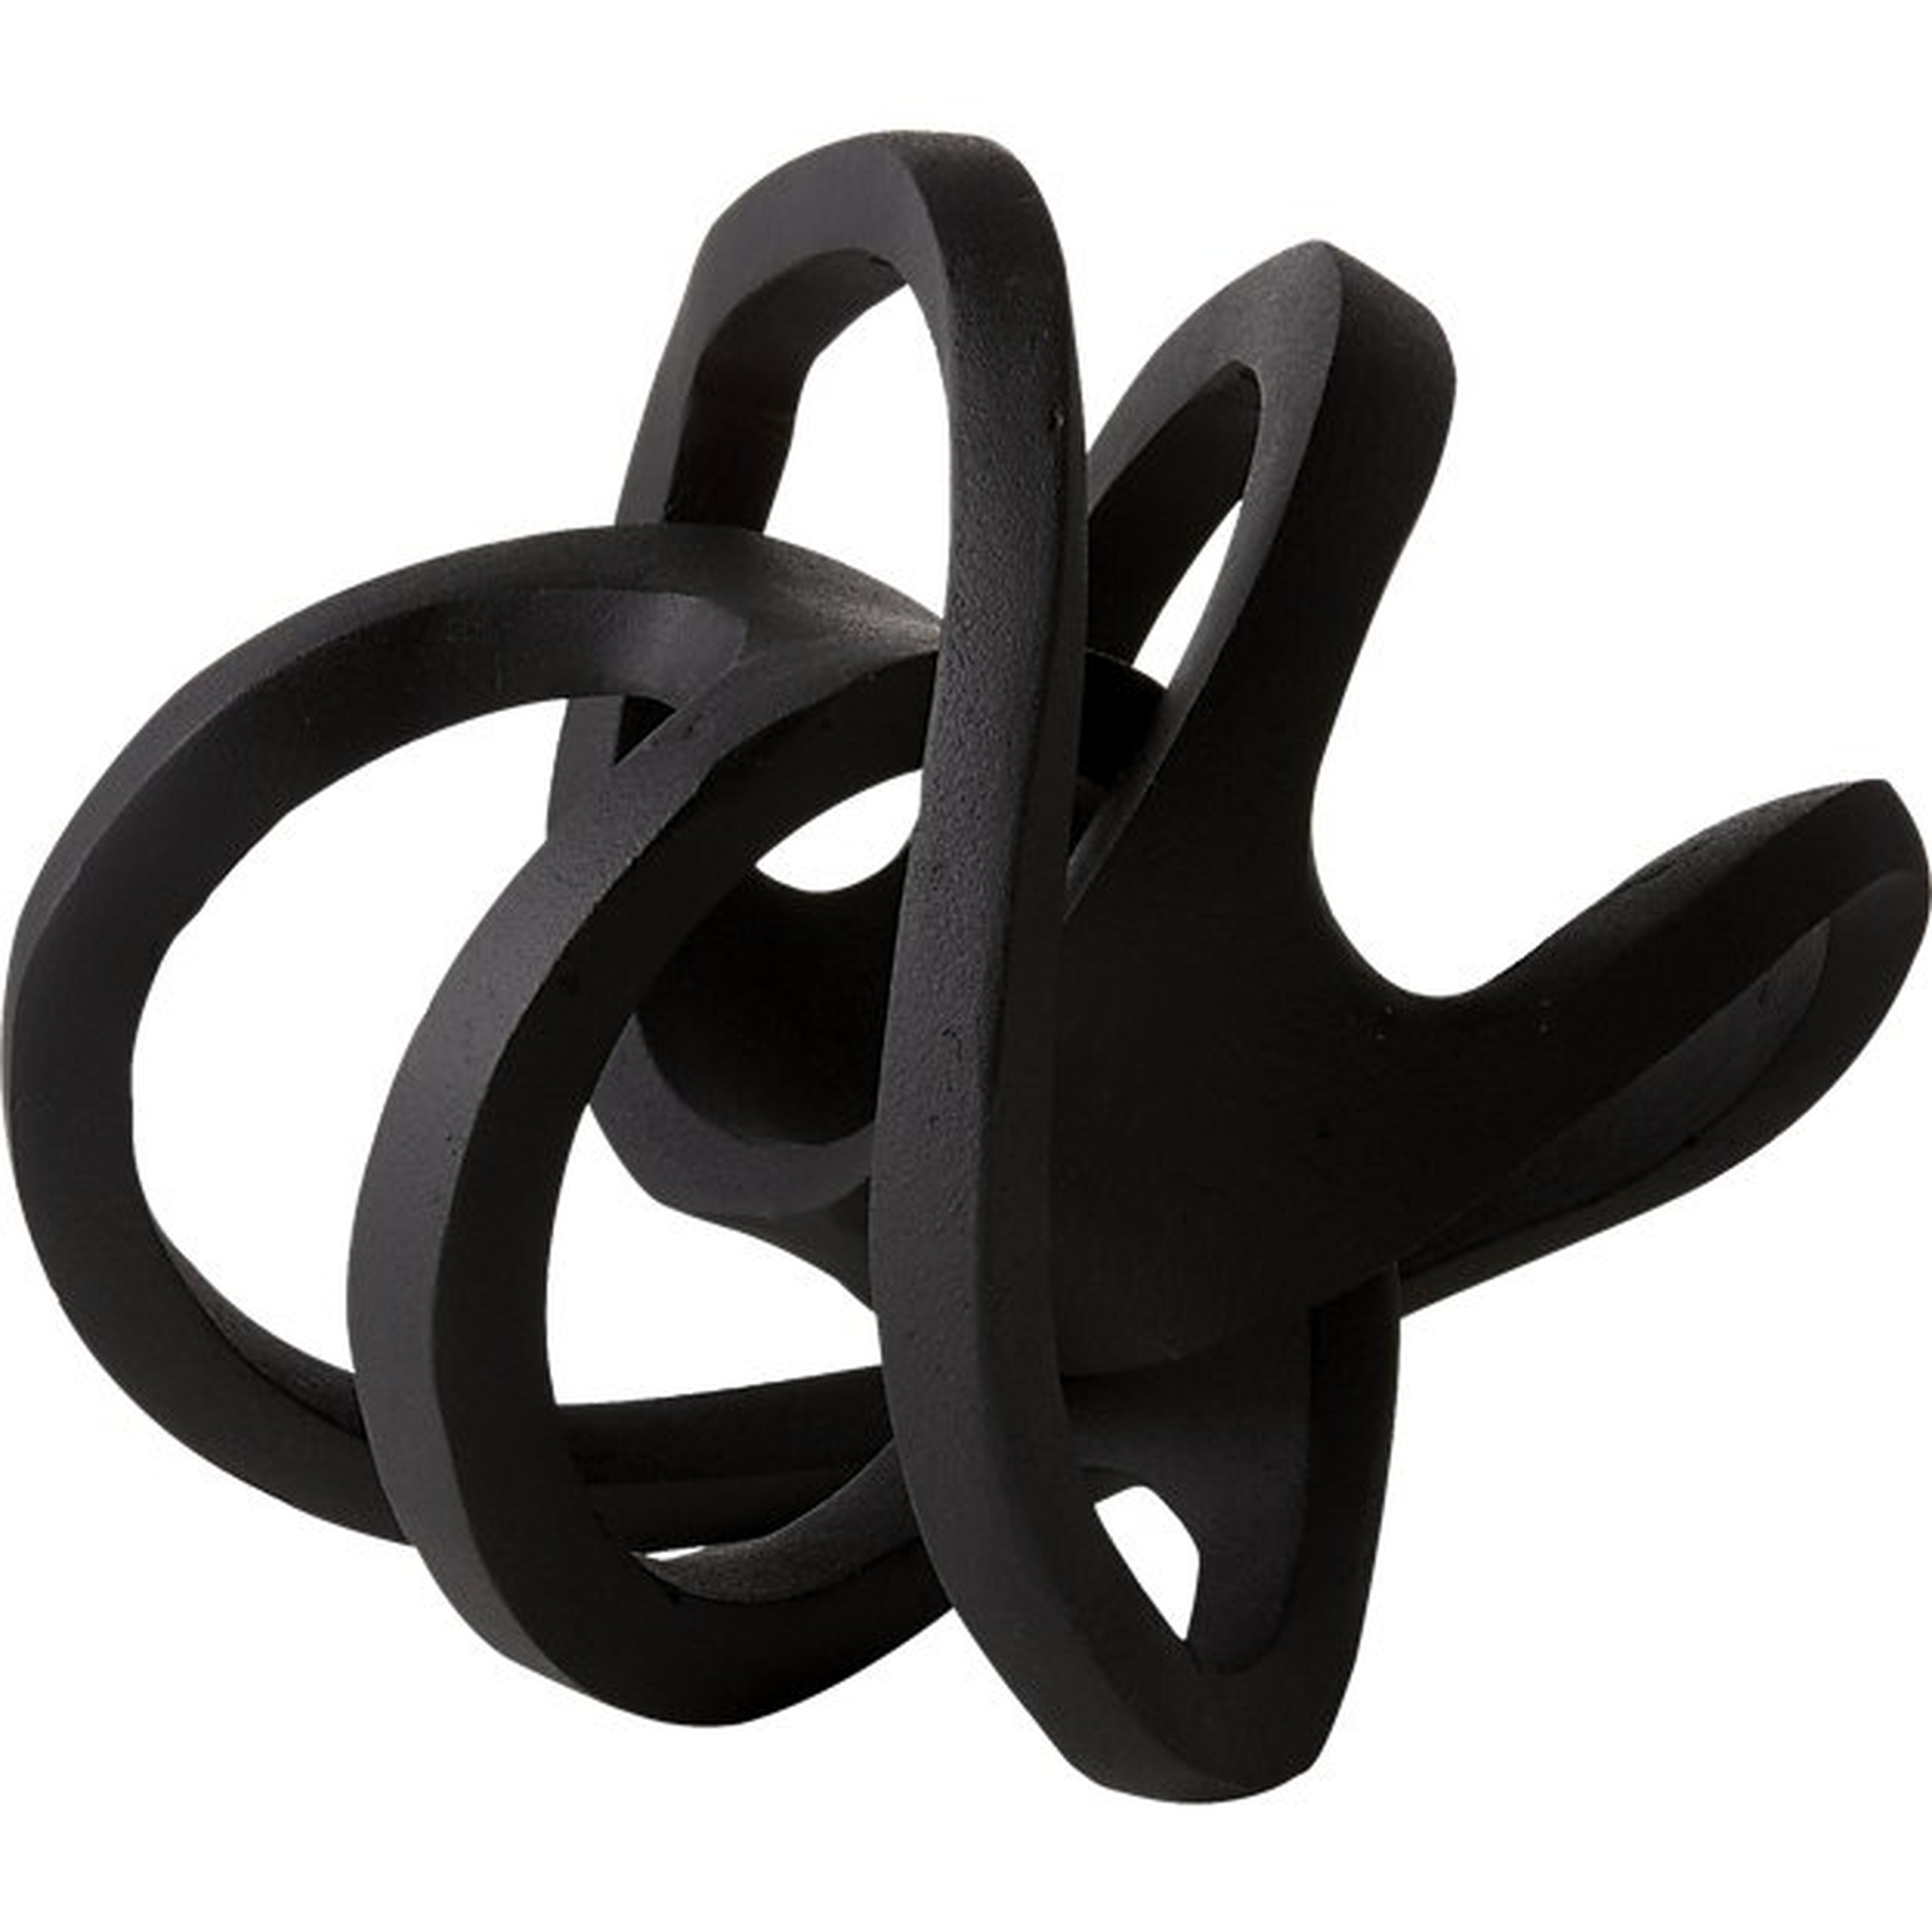 infinity black knot sculpture - CB2